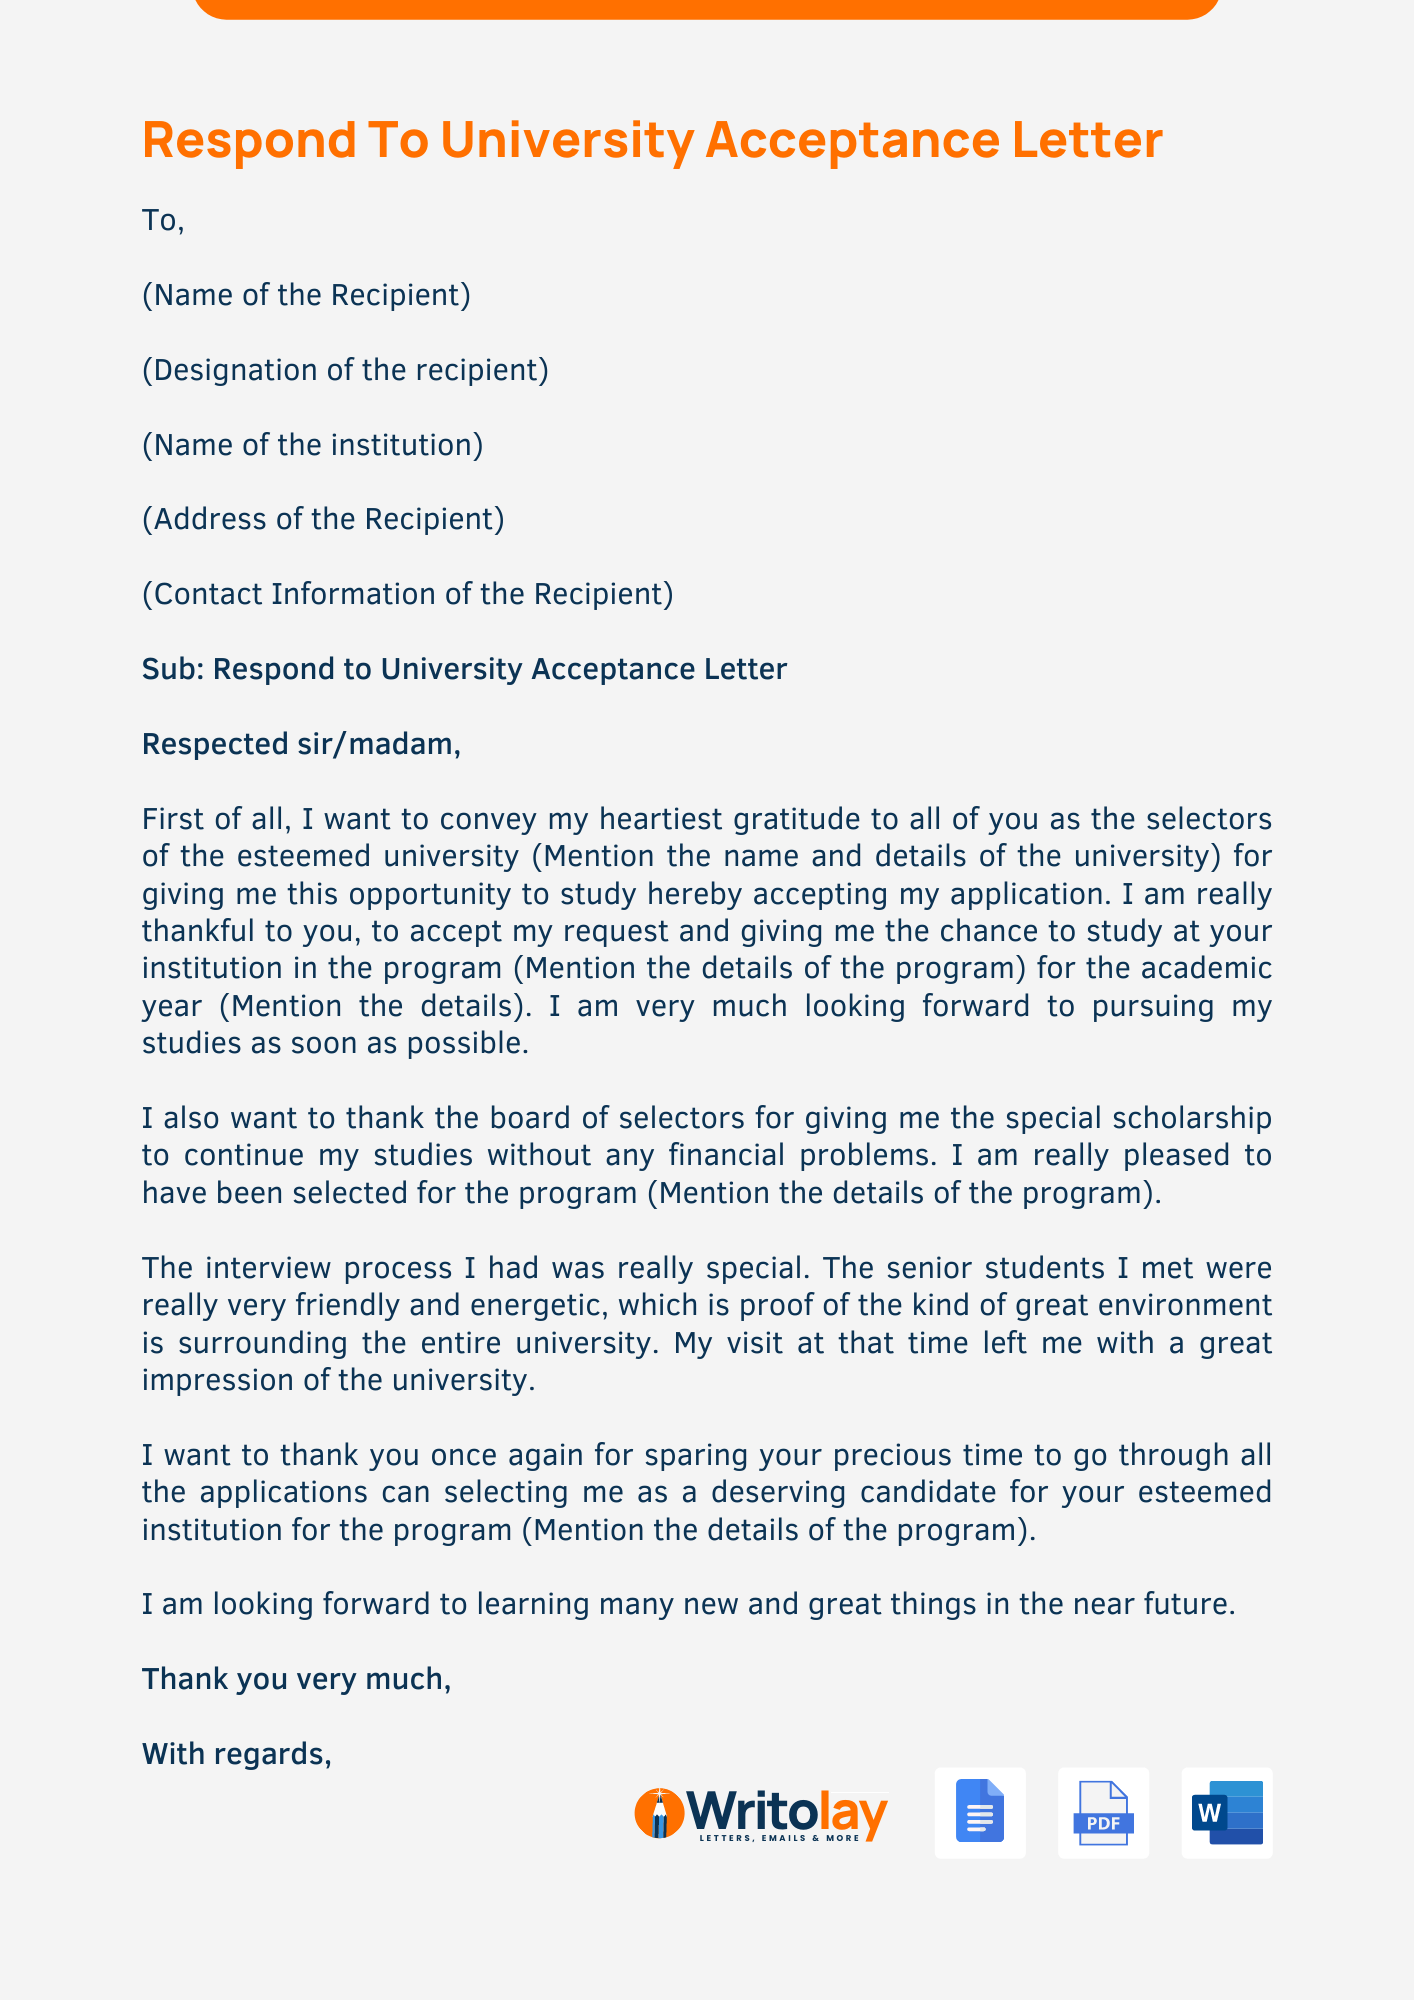 university acceptance letter reply